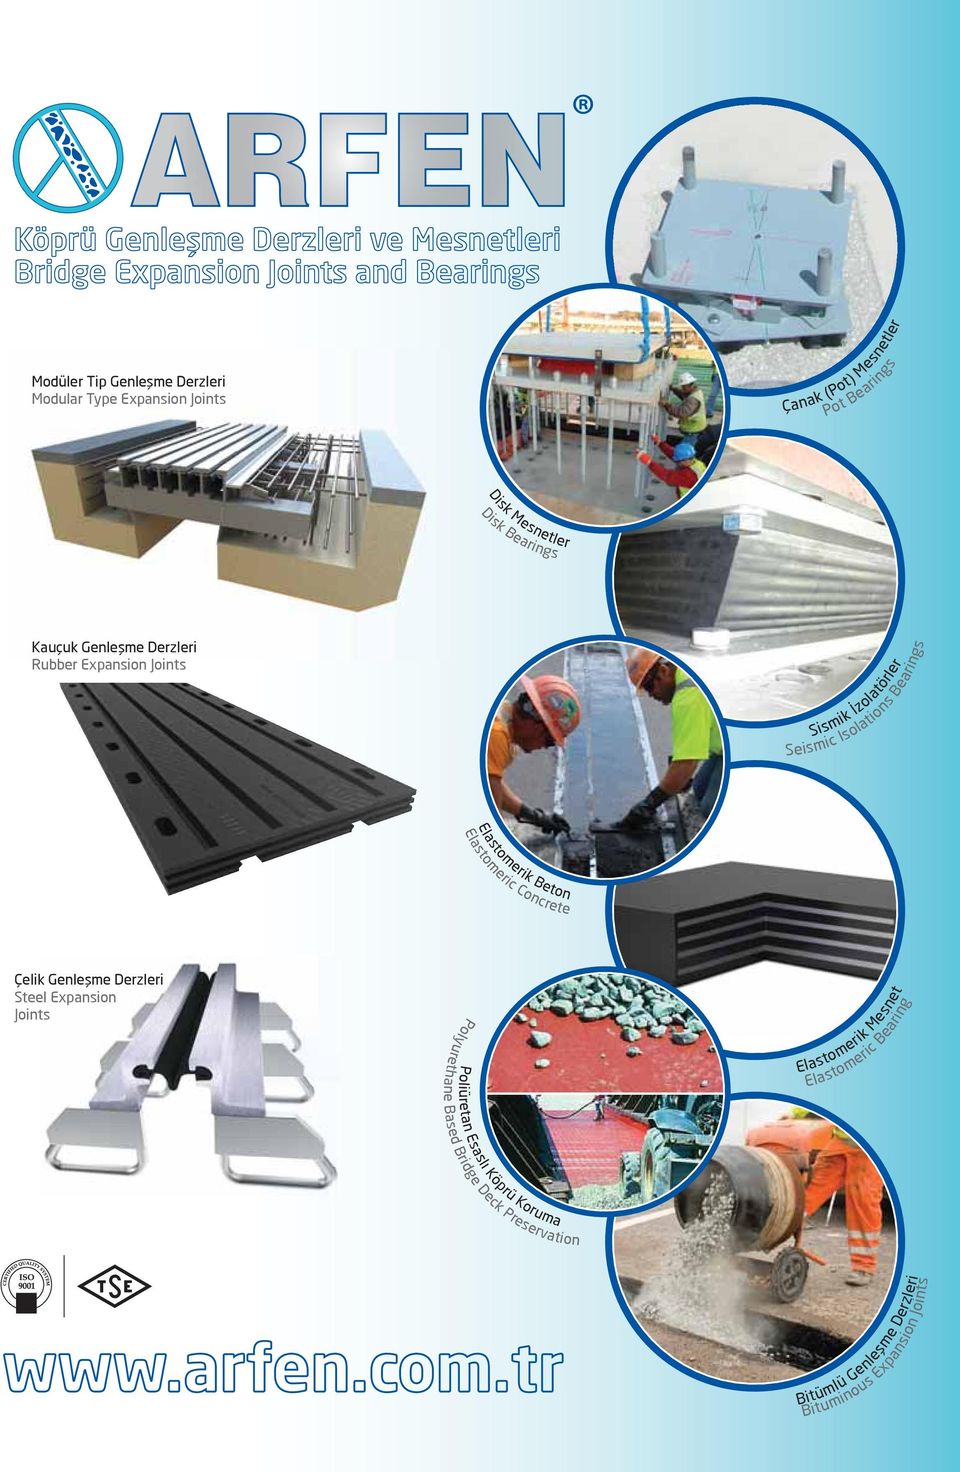 Beton Elastomeric Concrete Çelik Genle me Derzleri Steel Expansion Joints Elastomerik Mesnet Elastomeric Bearing